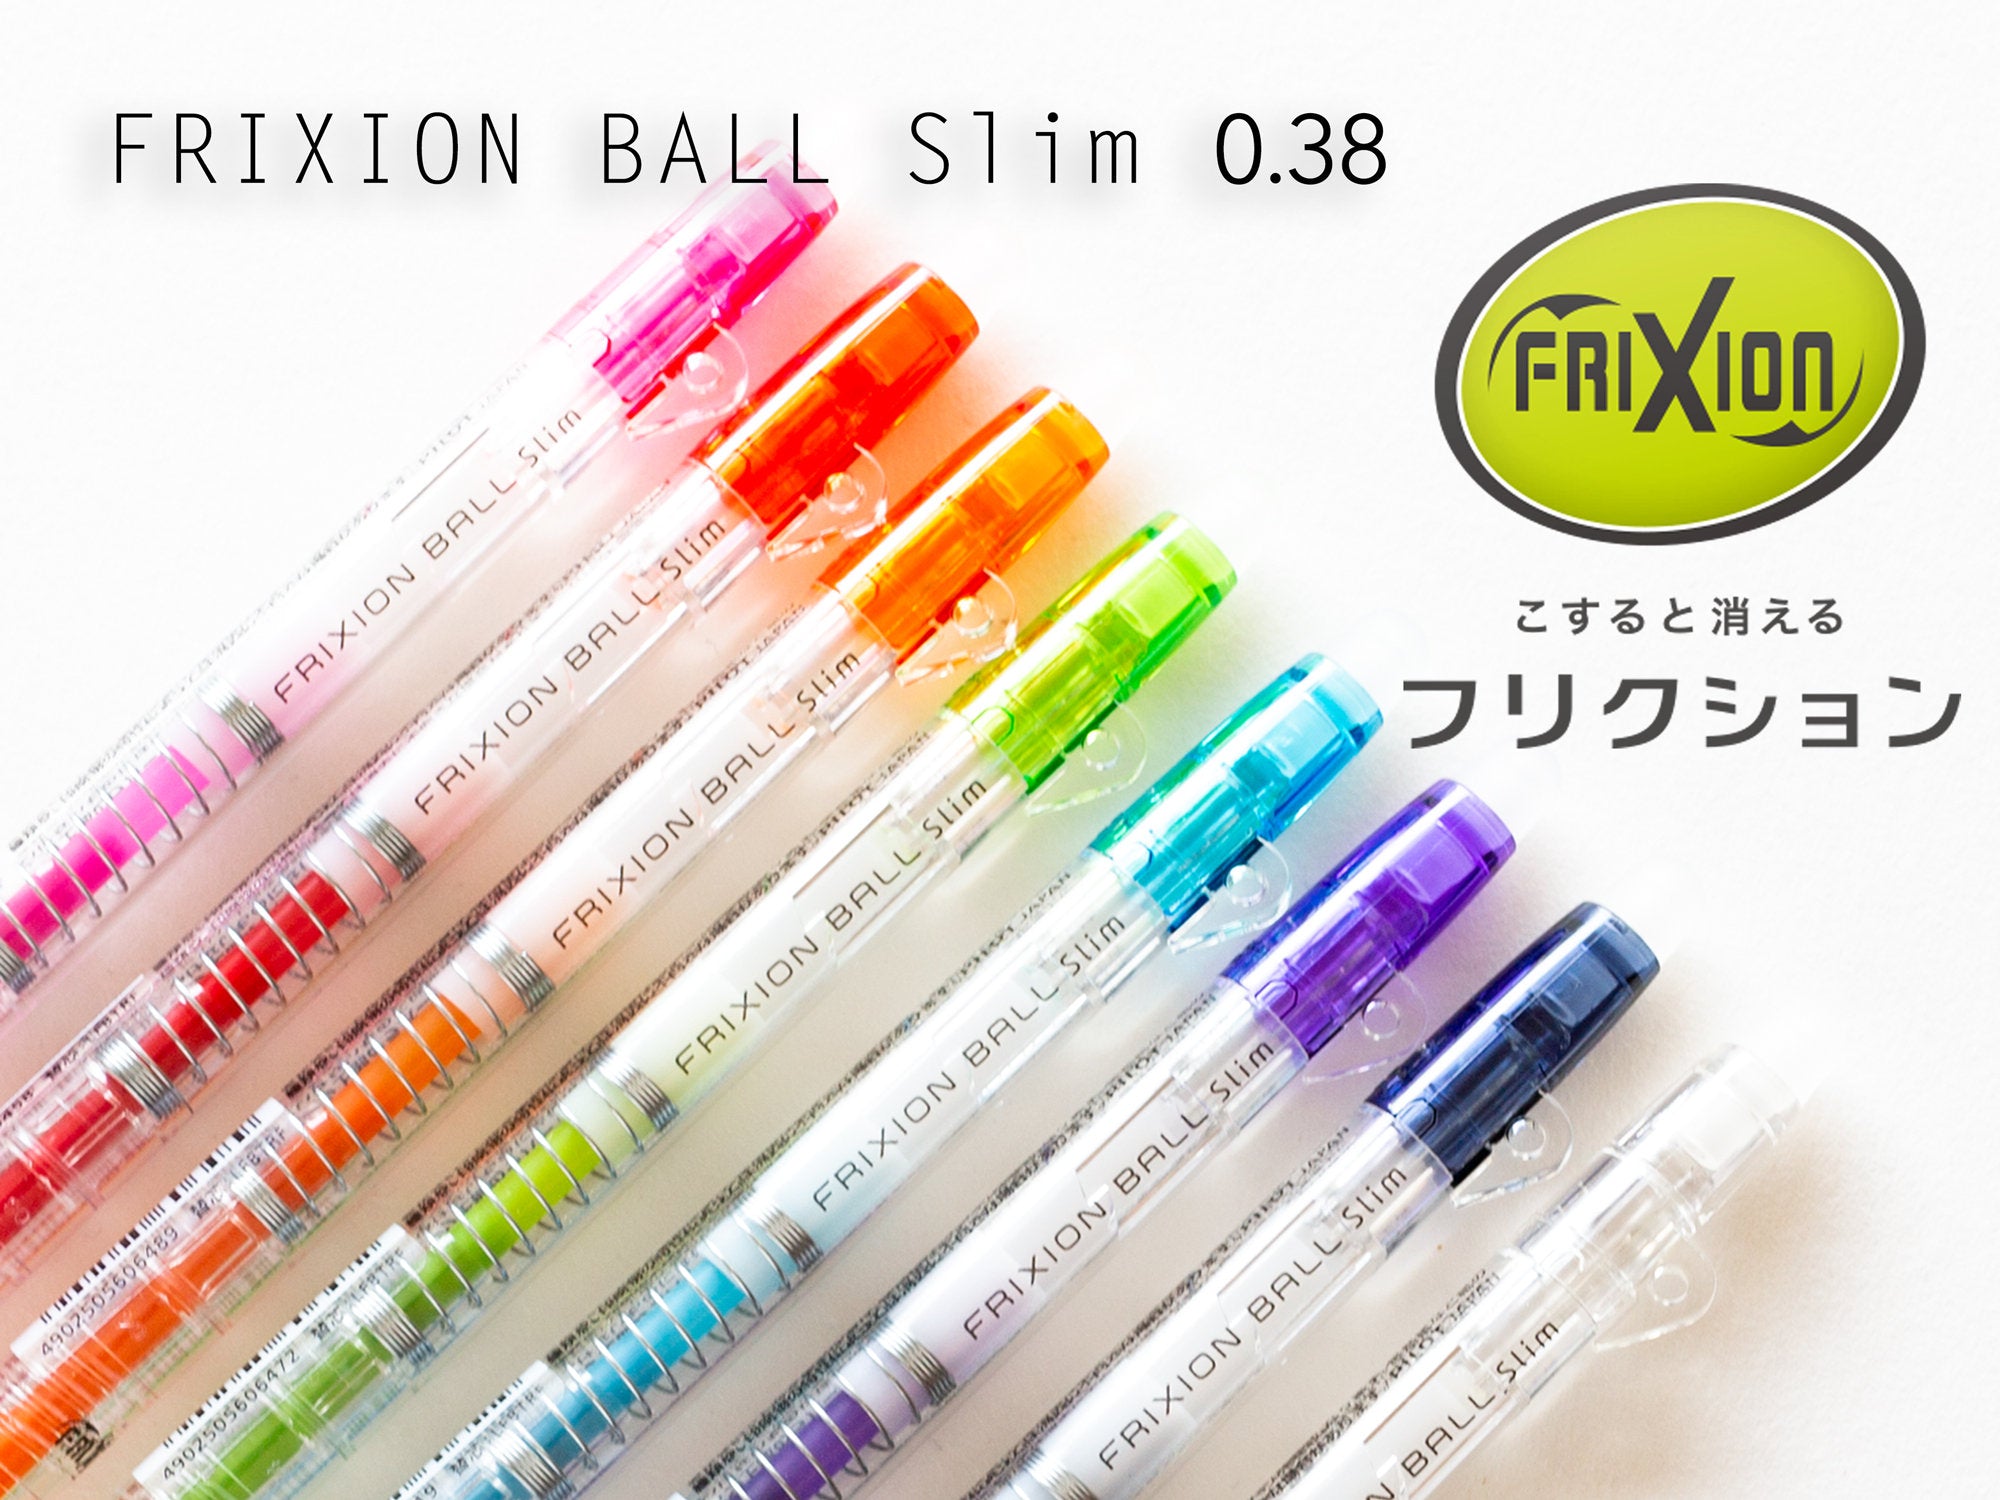 Pilot FriXion Ball Slim Gel Pen - 0.38 mm - Black